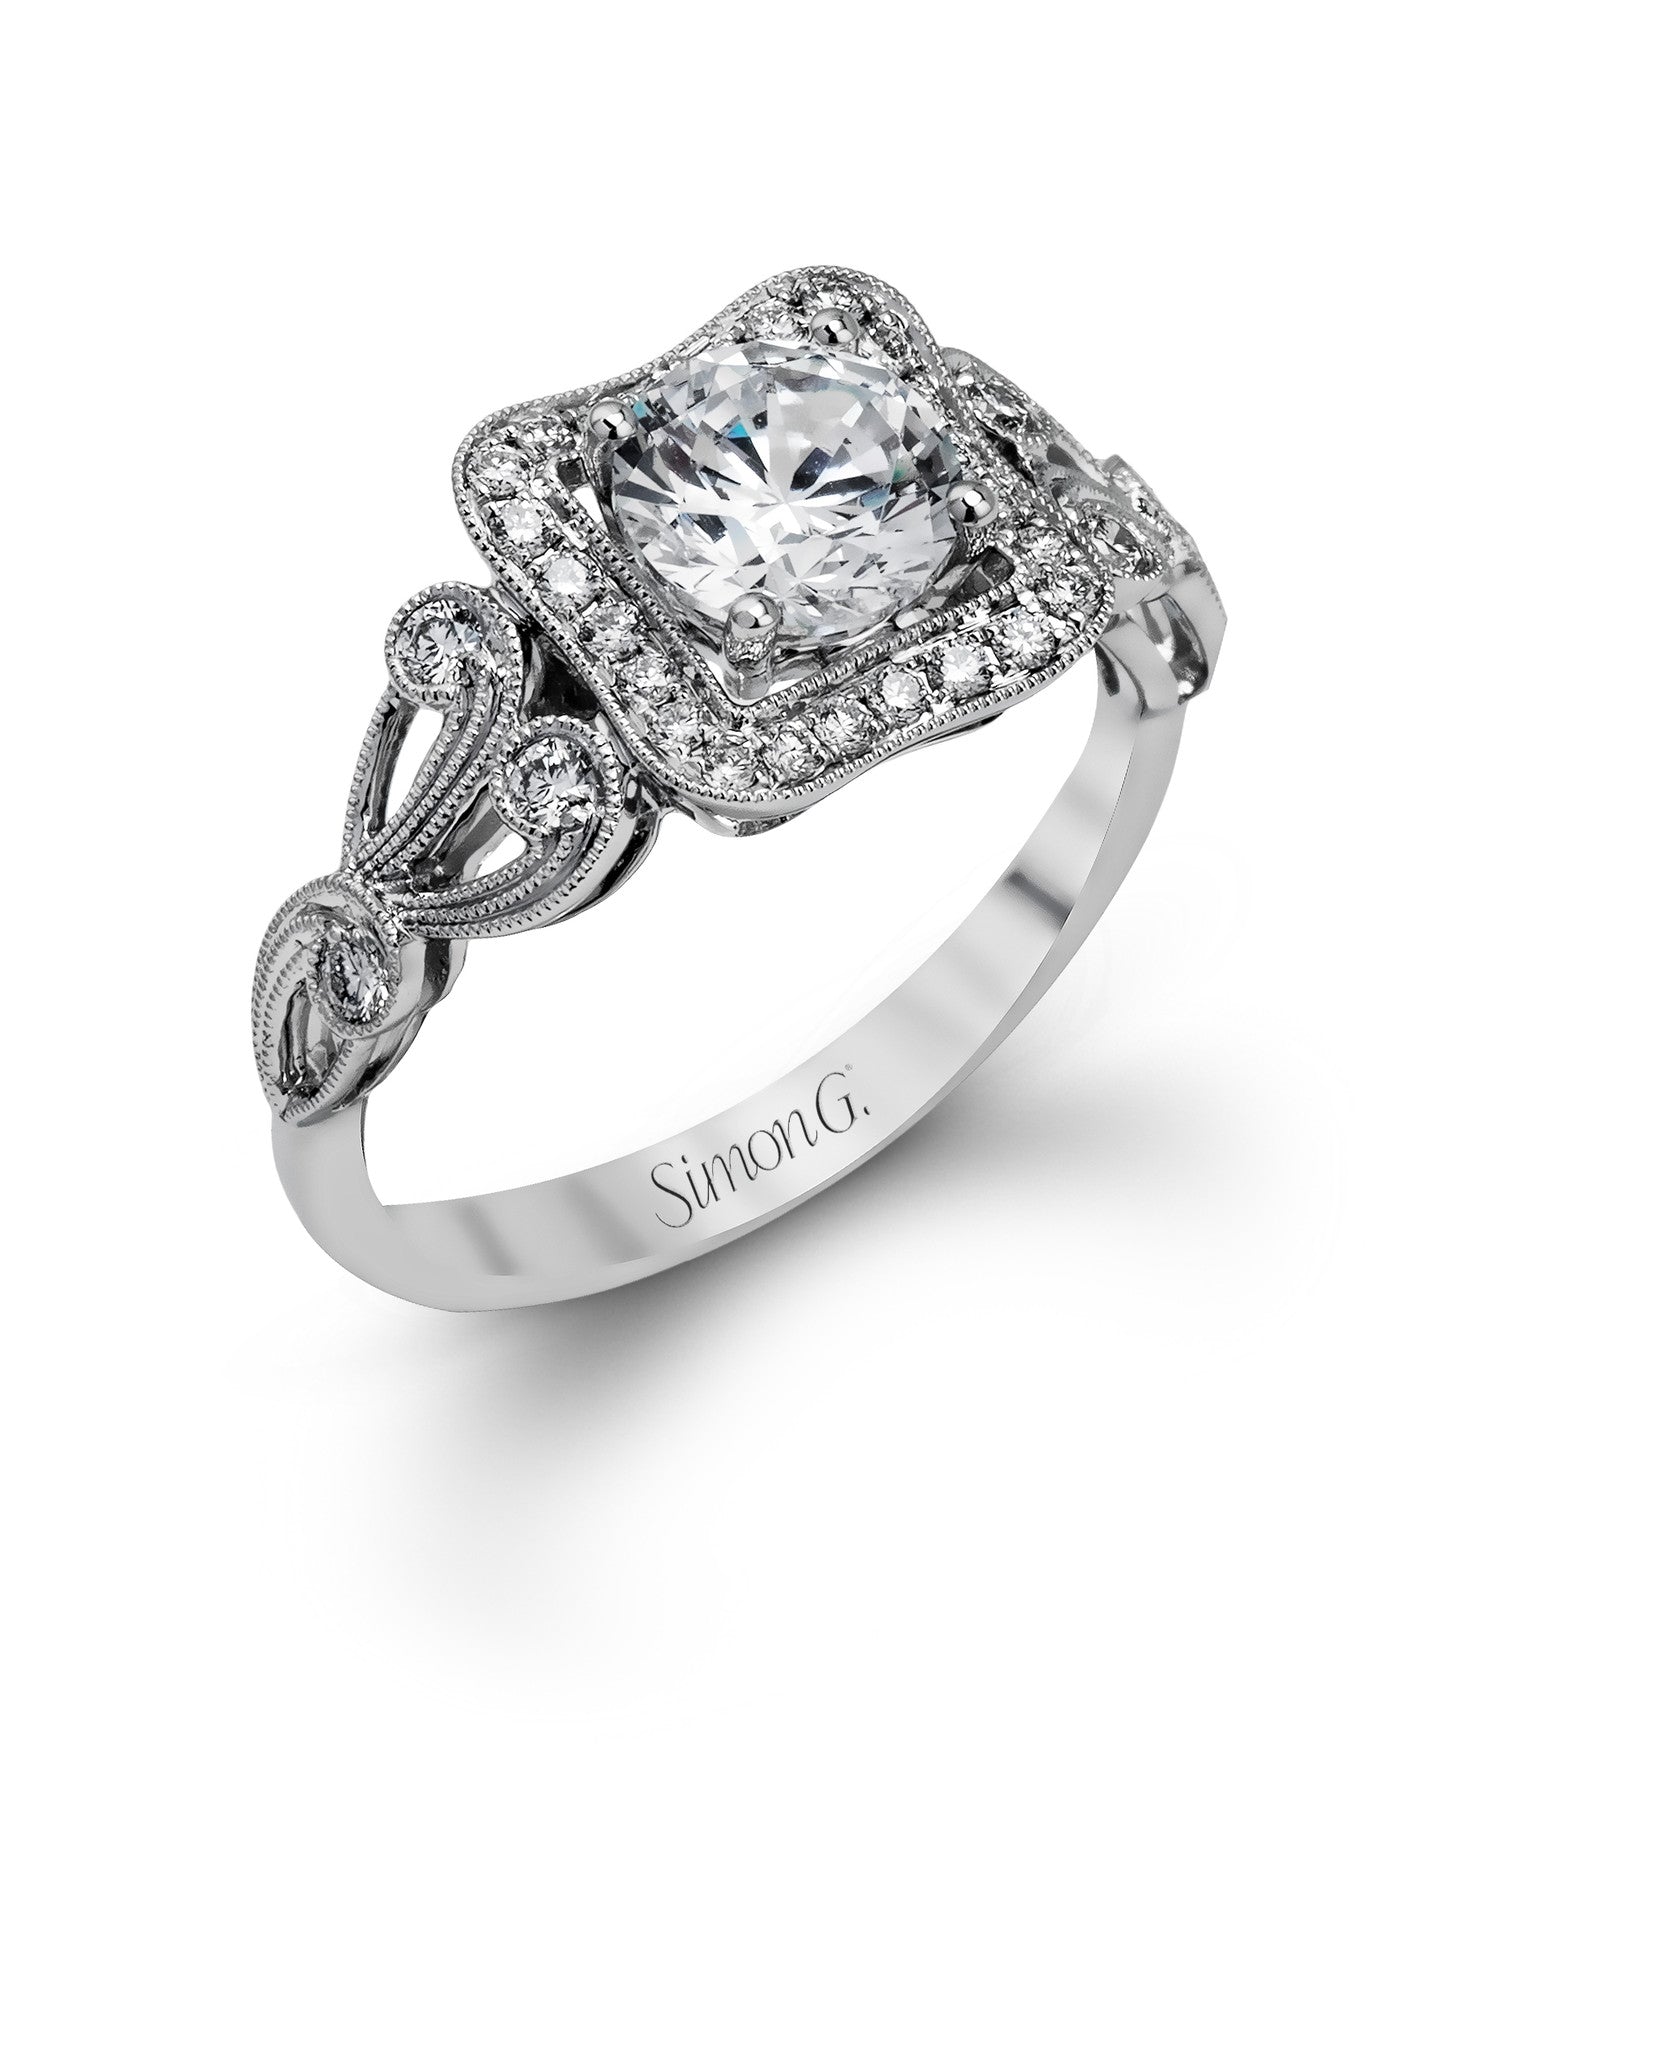 Simon G Antique Halo Engagement Ring - 18k gold weighing 4.30 grams - Round four prong-set diamonds weighing .29 carats